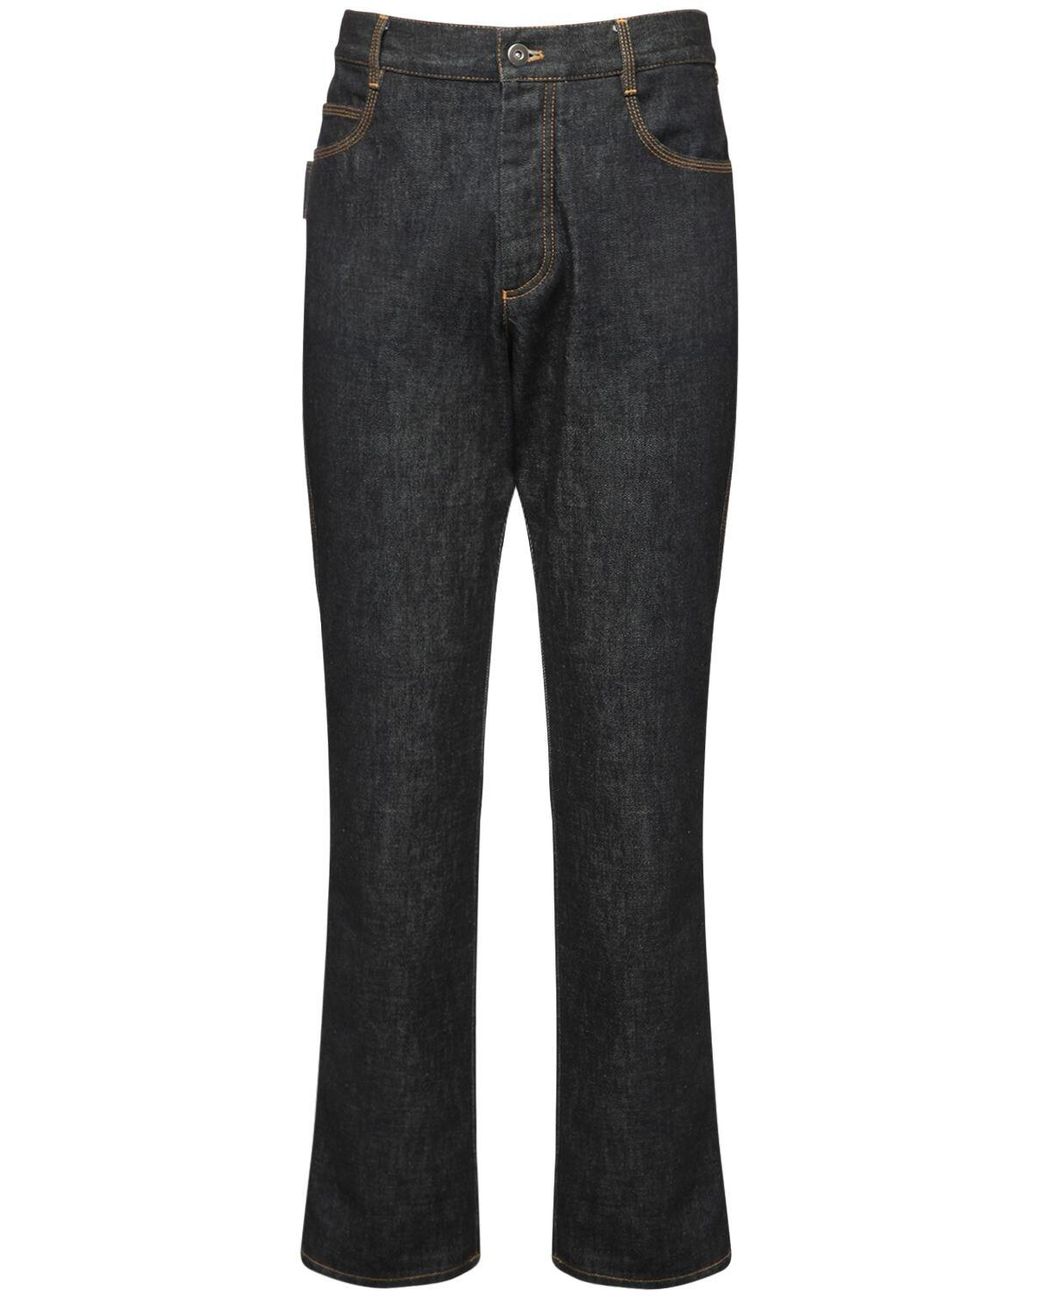 Bottega Veneta Brut Cotton Denim Jeans in Indigo (Blue) for Men - Lyst